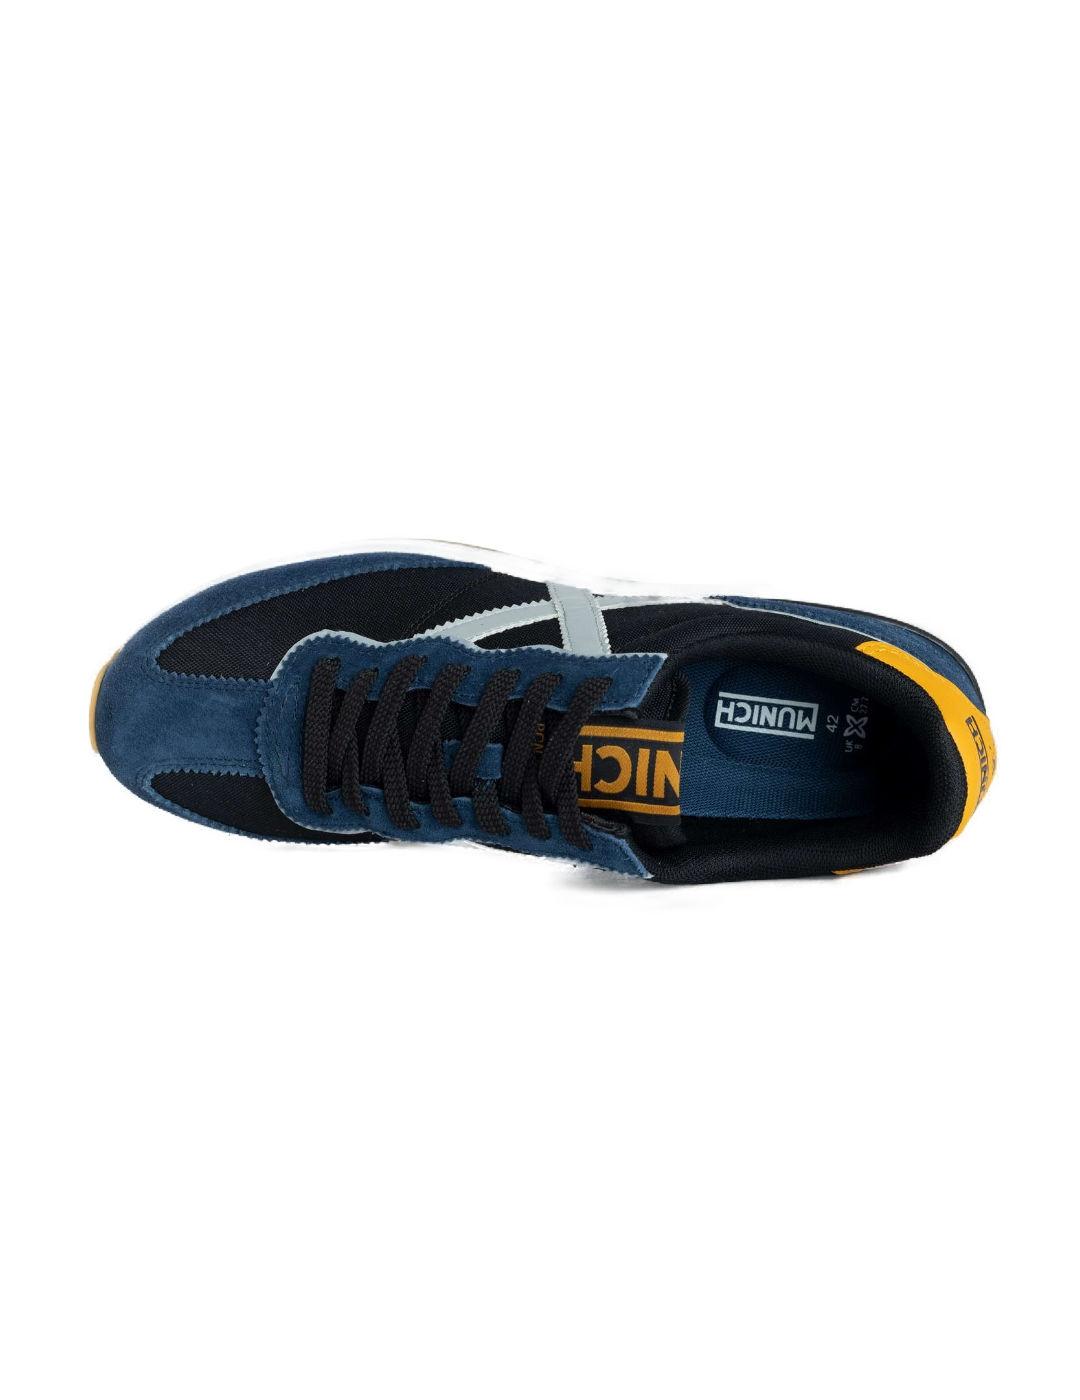 Zapatillas Munich Dynamo 61 azul/amarillo para hombre